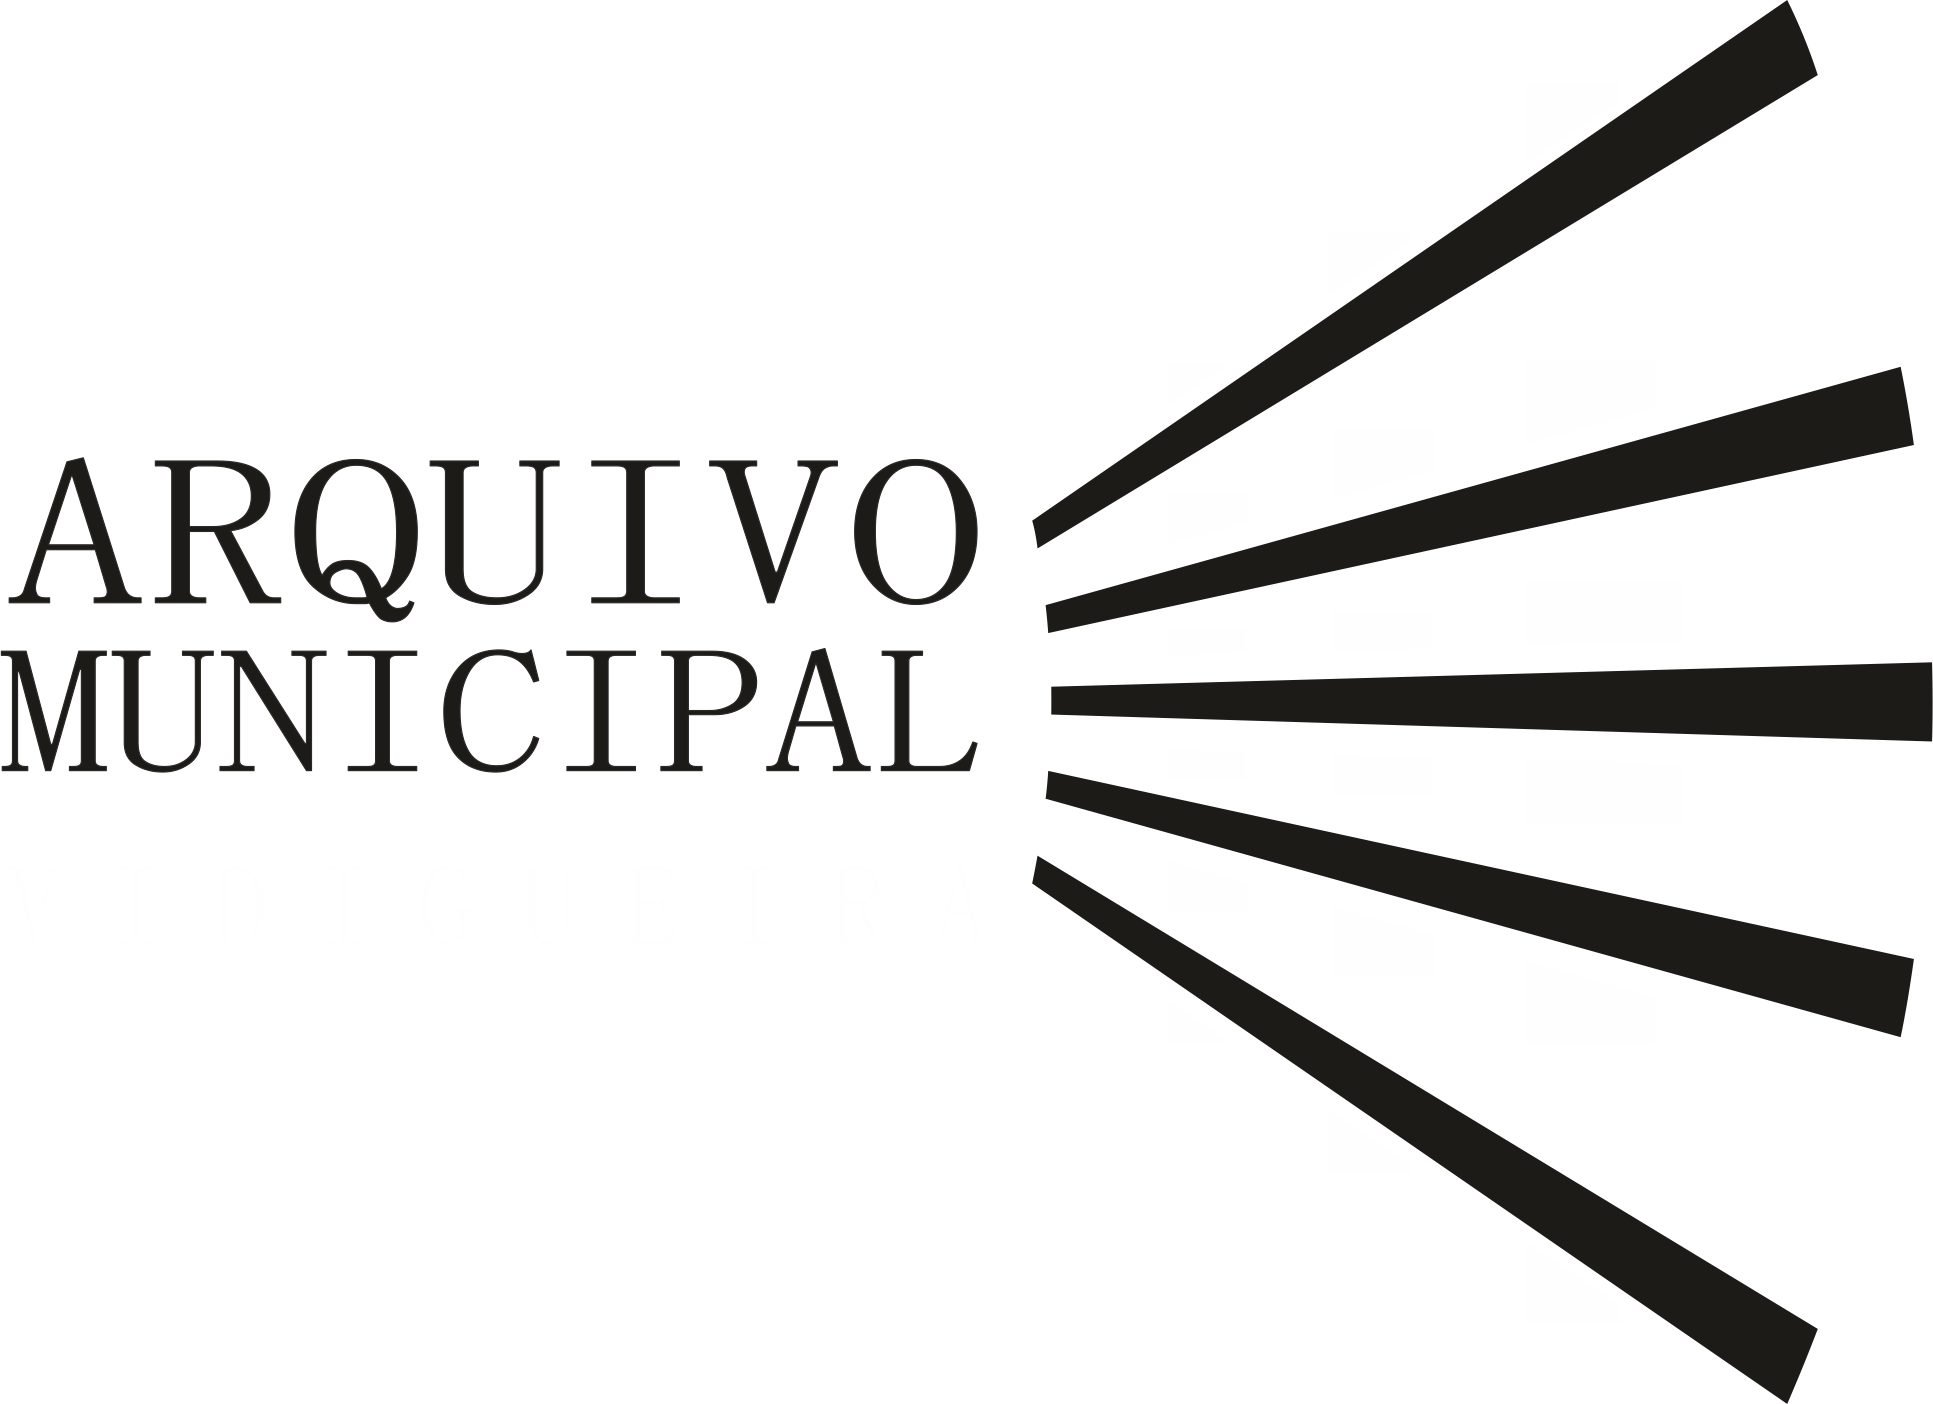 Arquivo Municipal da Vidigueira